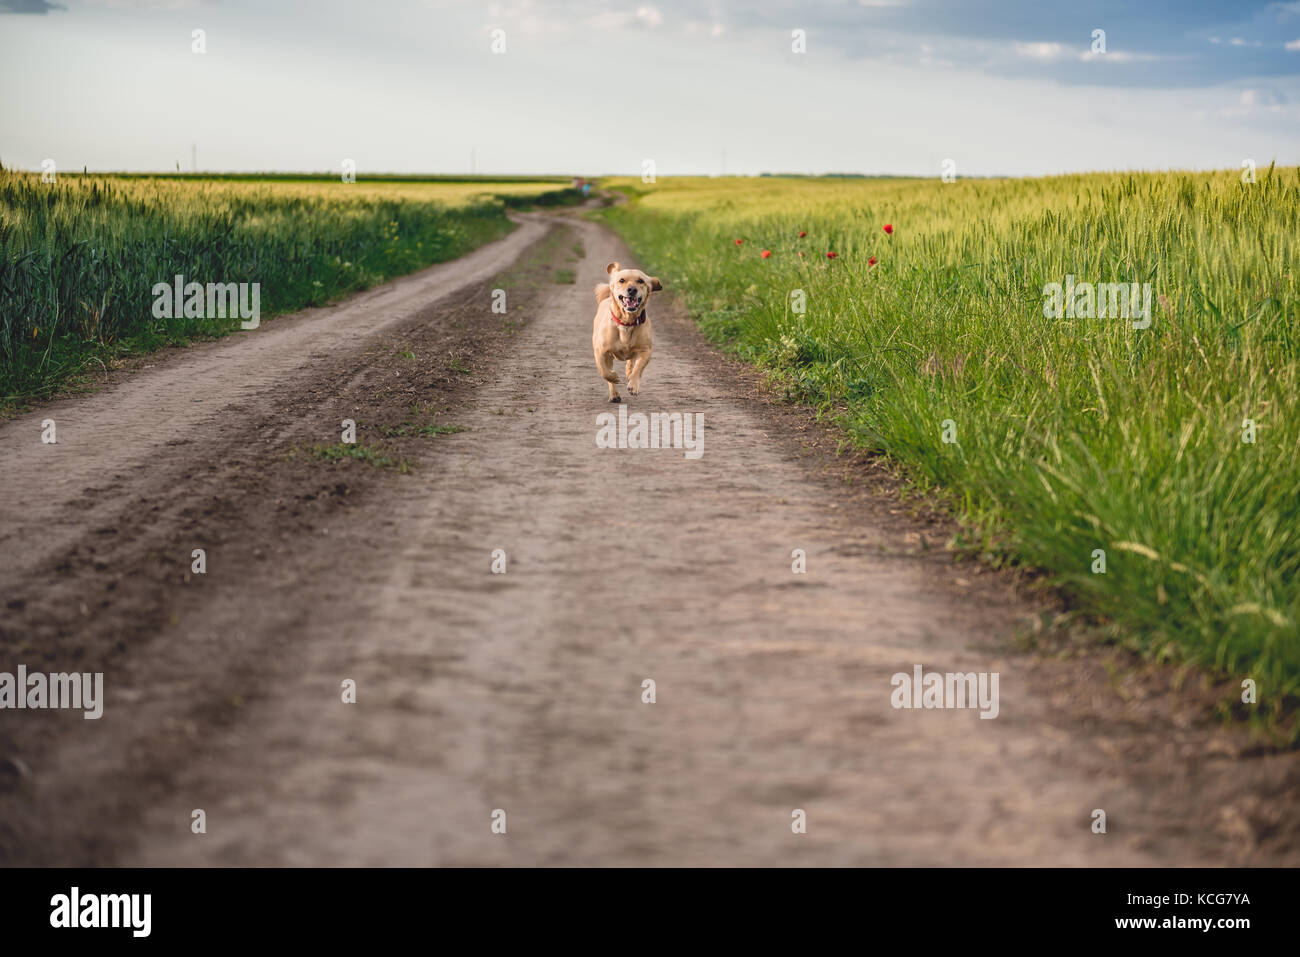 Small yellow dog running down rural dirt road Stock Photo